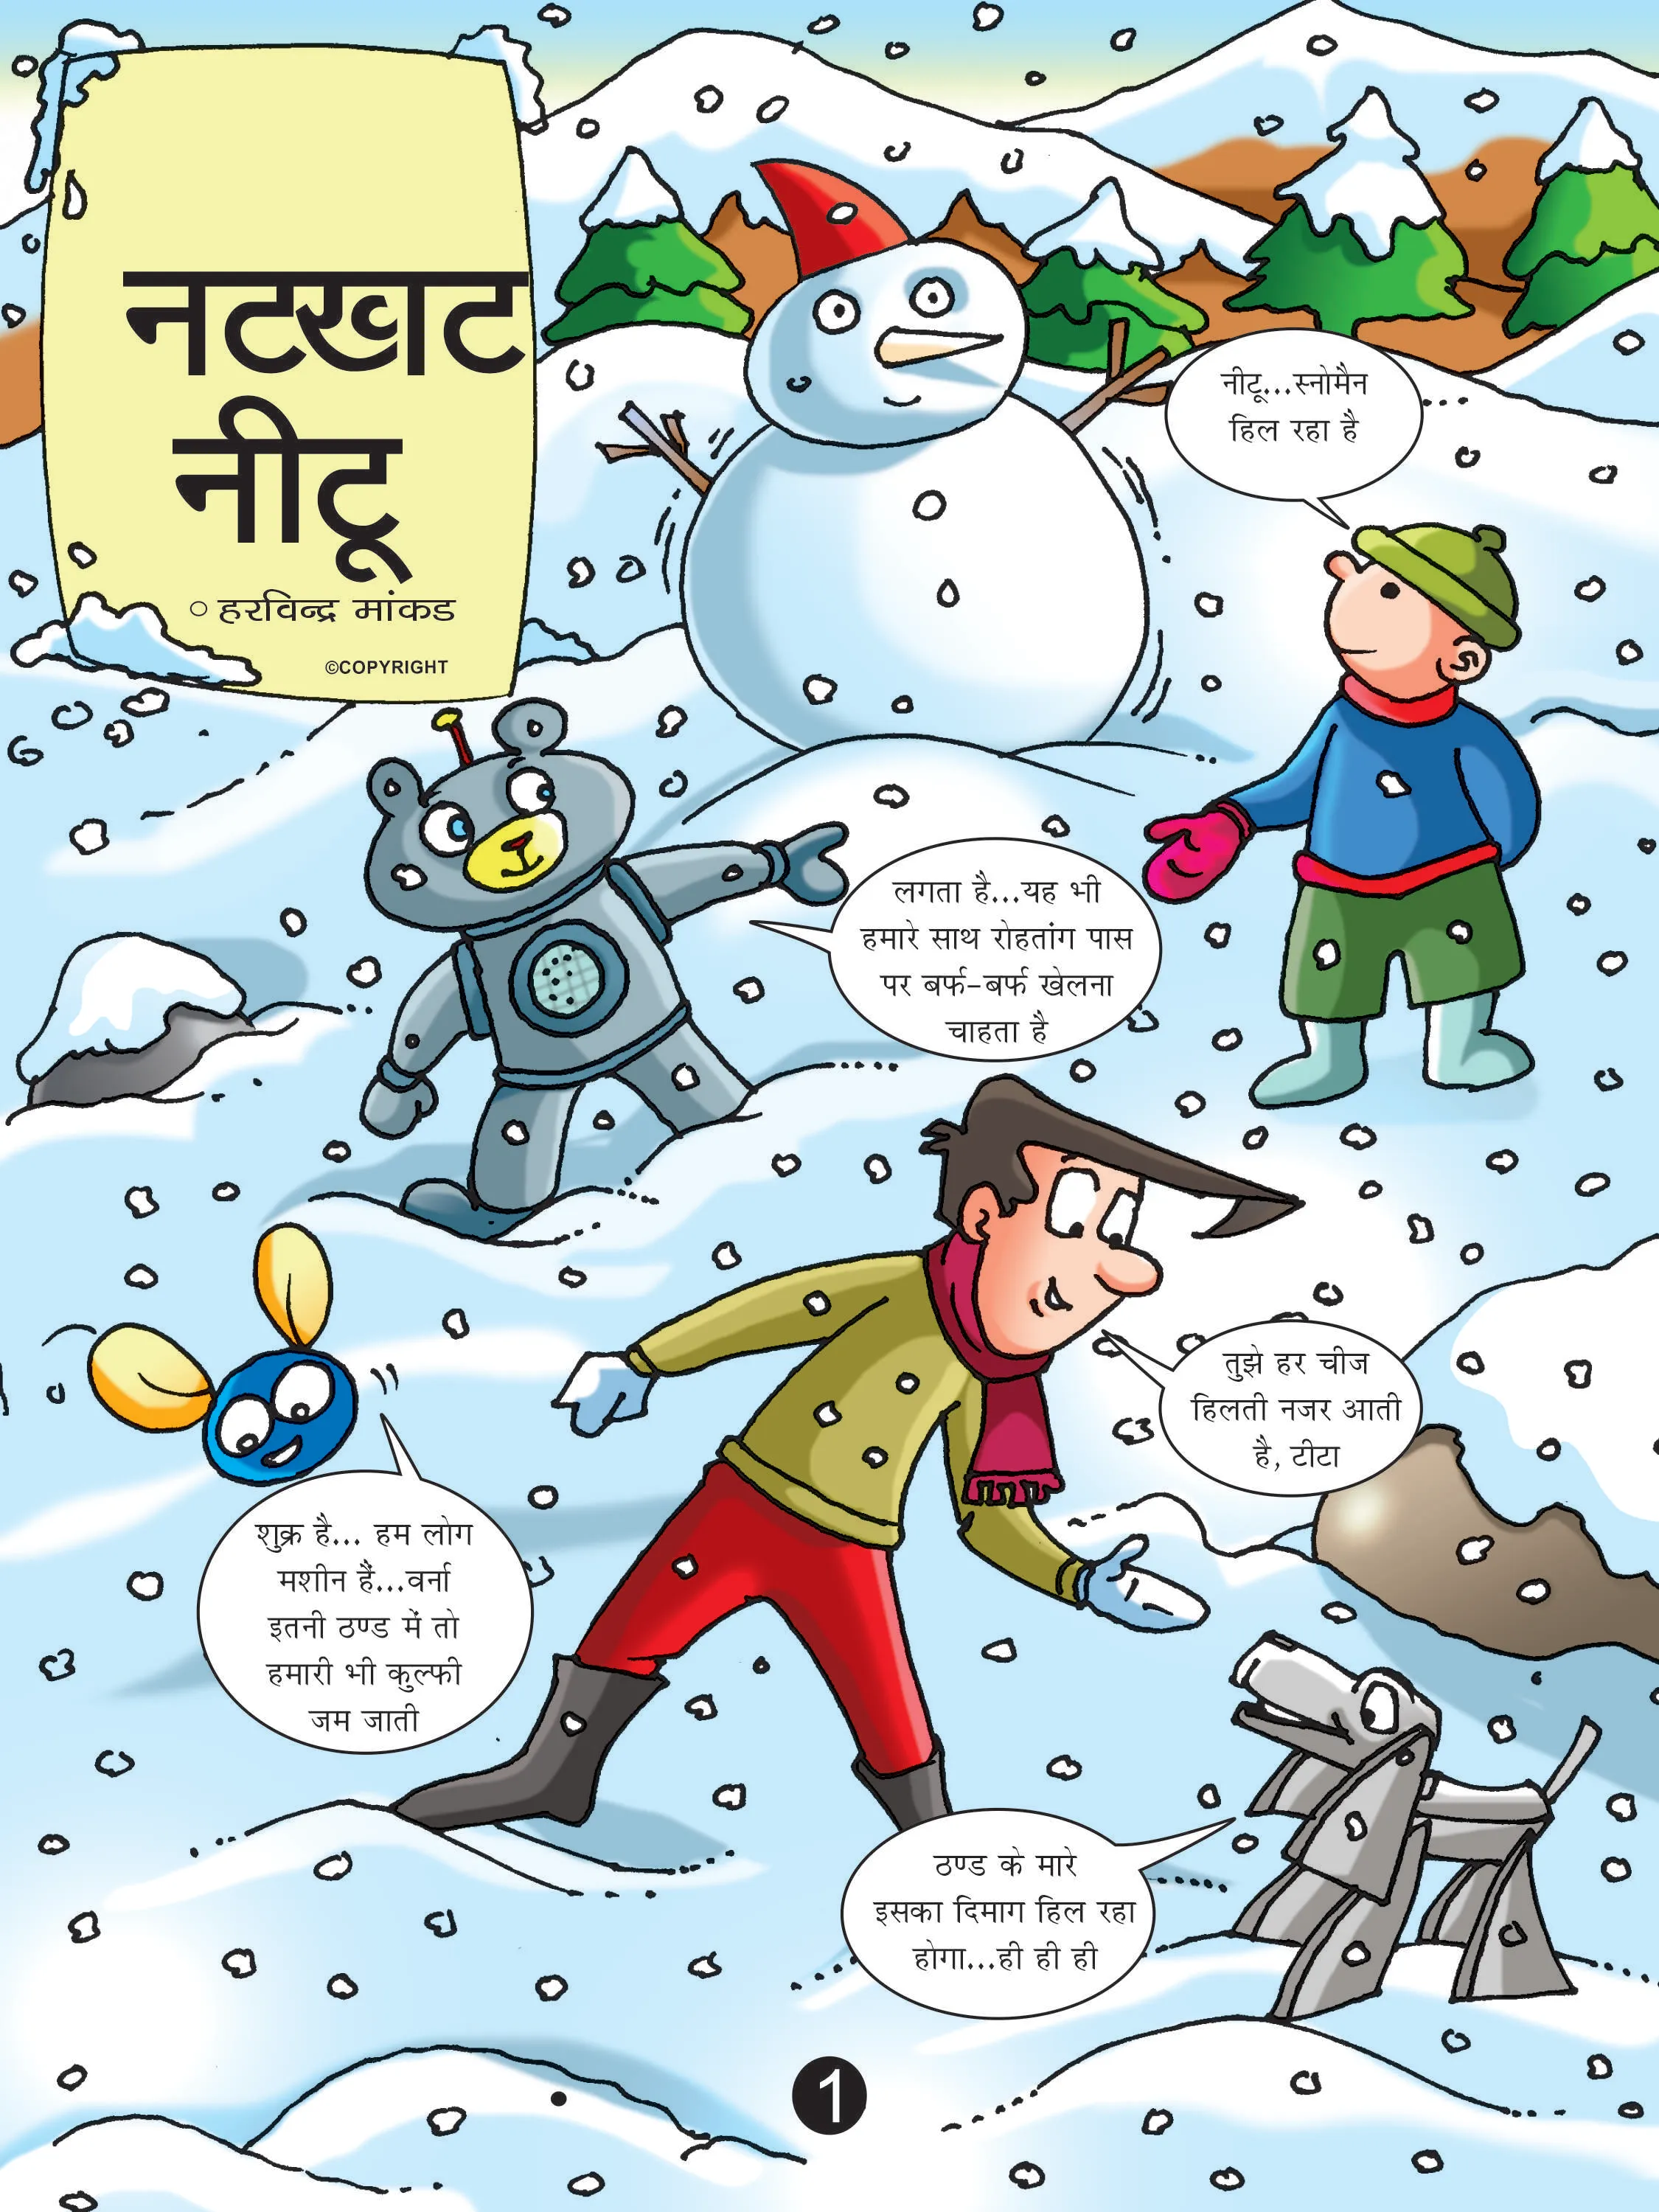 lotpot e-comics cartoon character Natkhat neetu